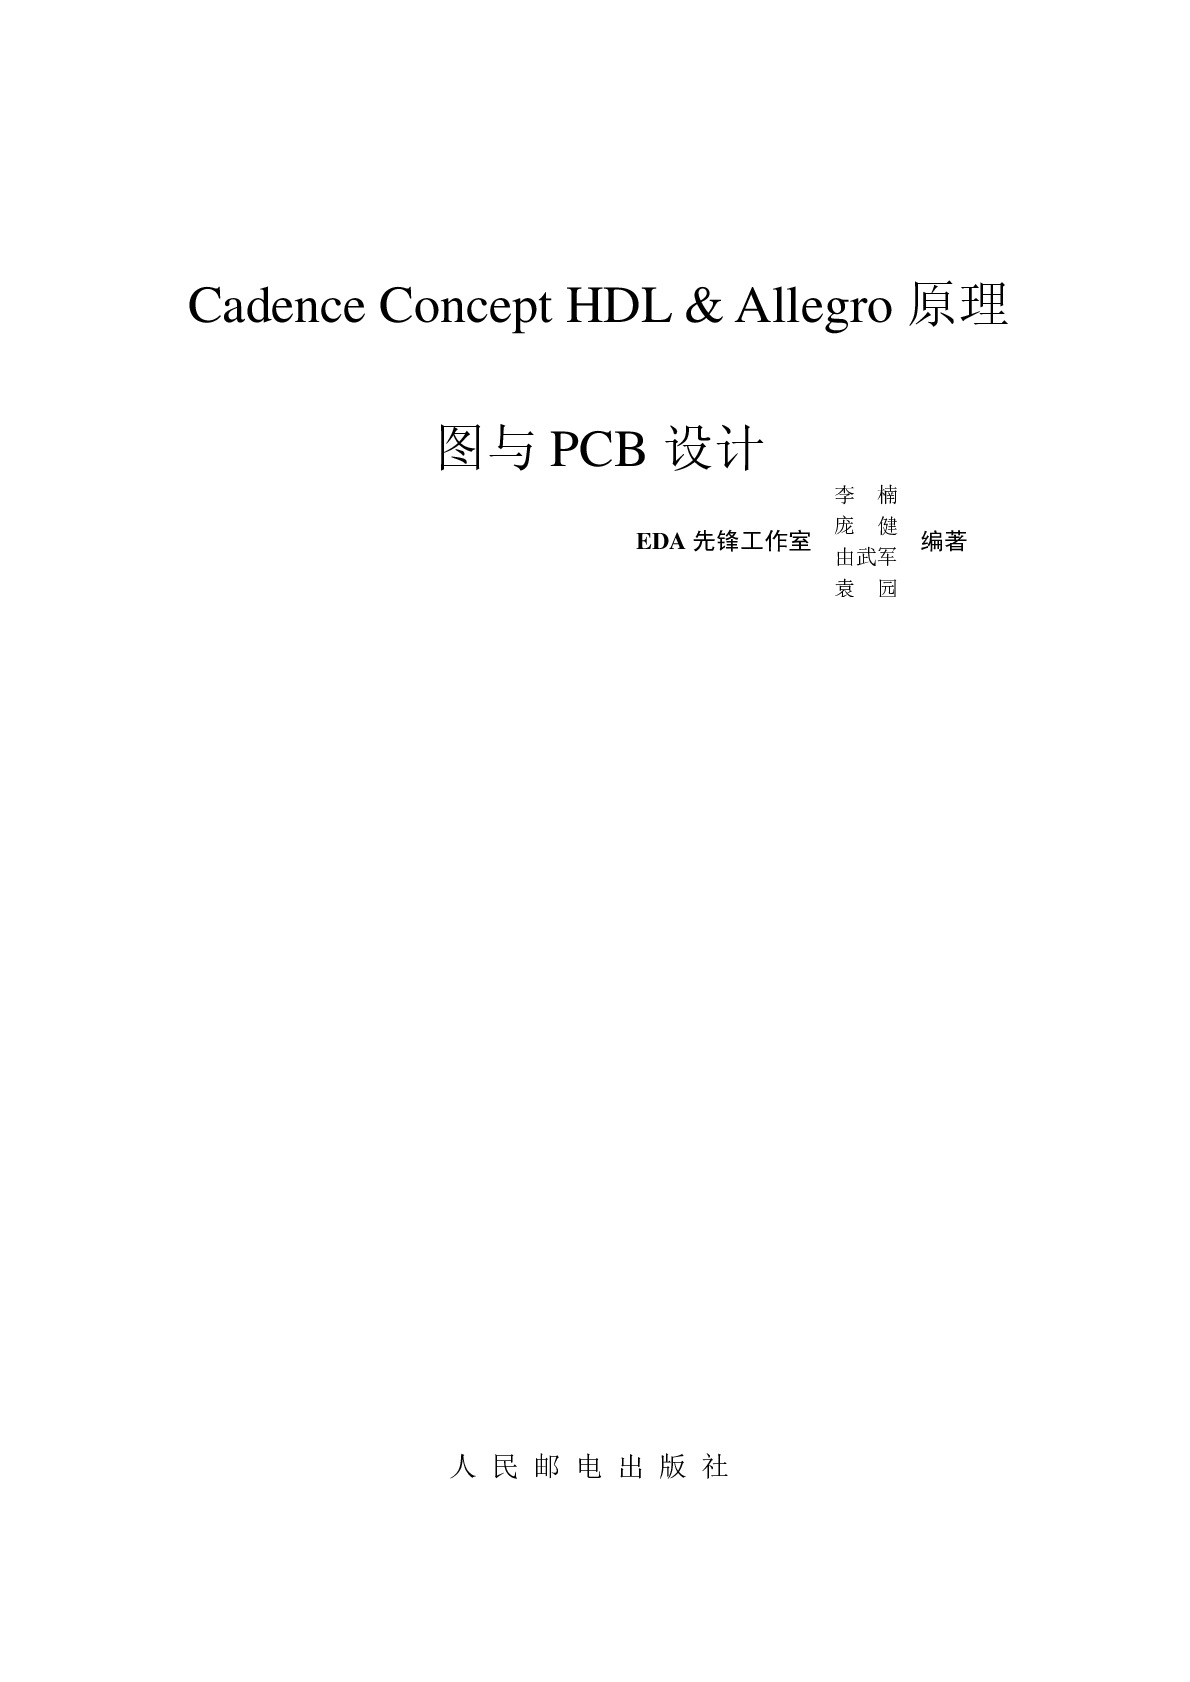 《Cadence Concept HDL & Allegro原理图与PCB设计》